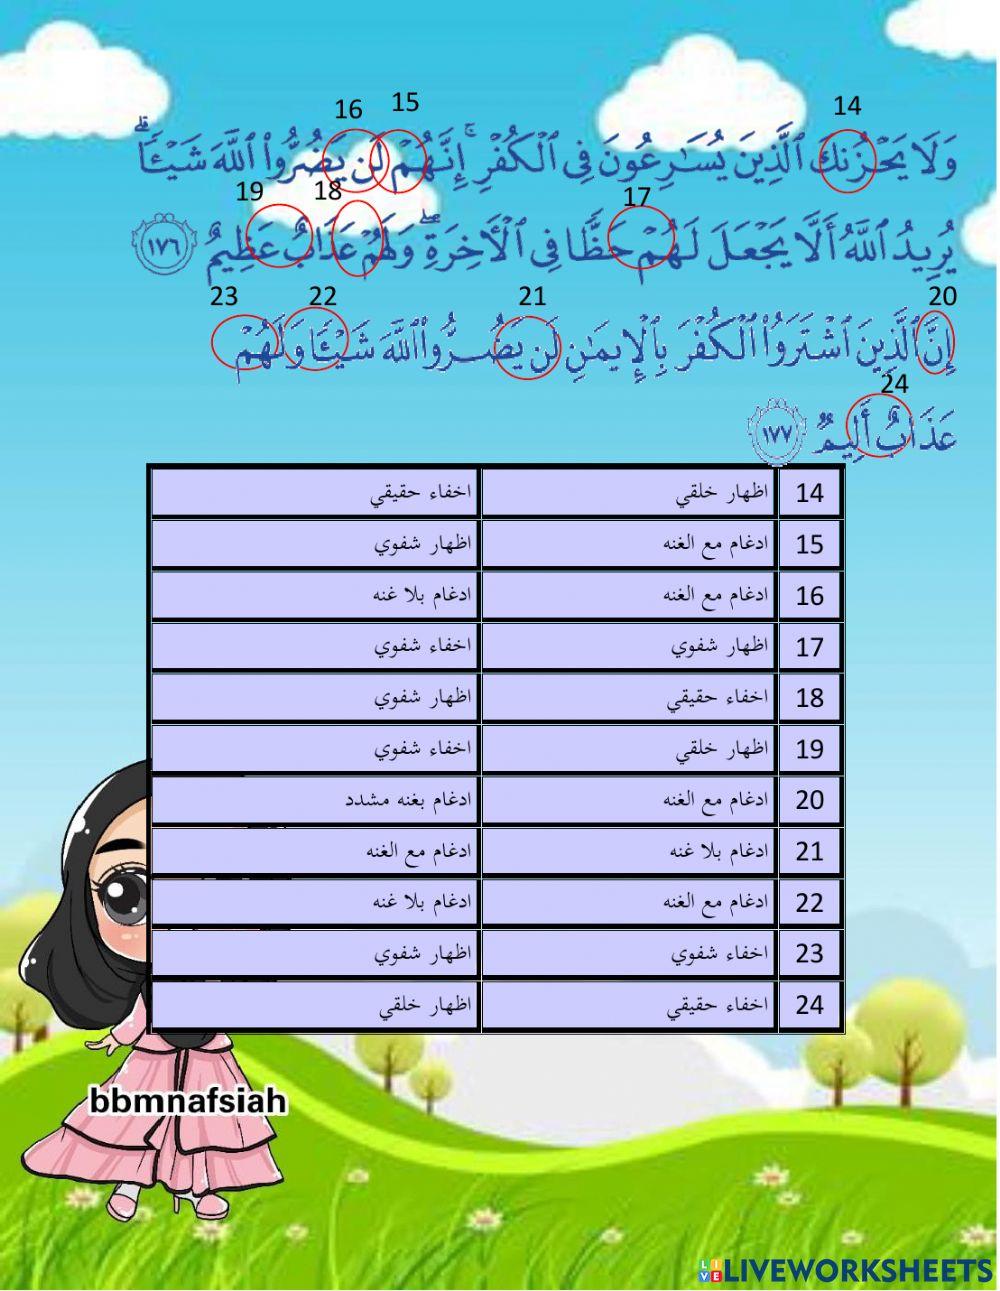 Surah Al-Imran ayat 174-177